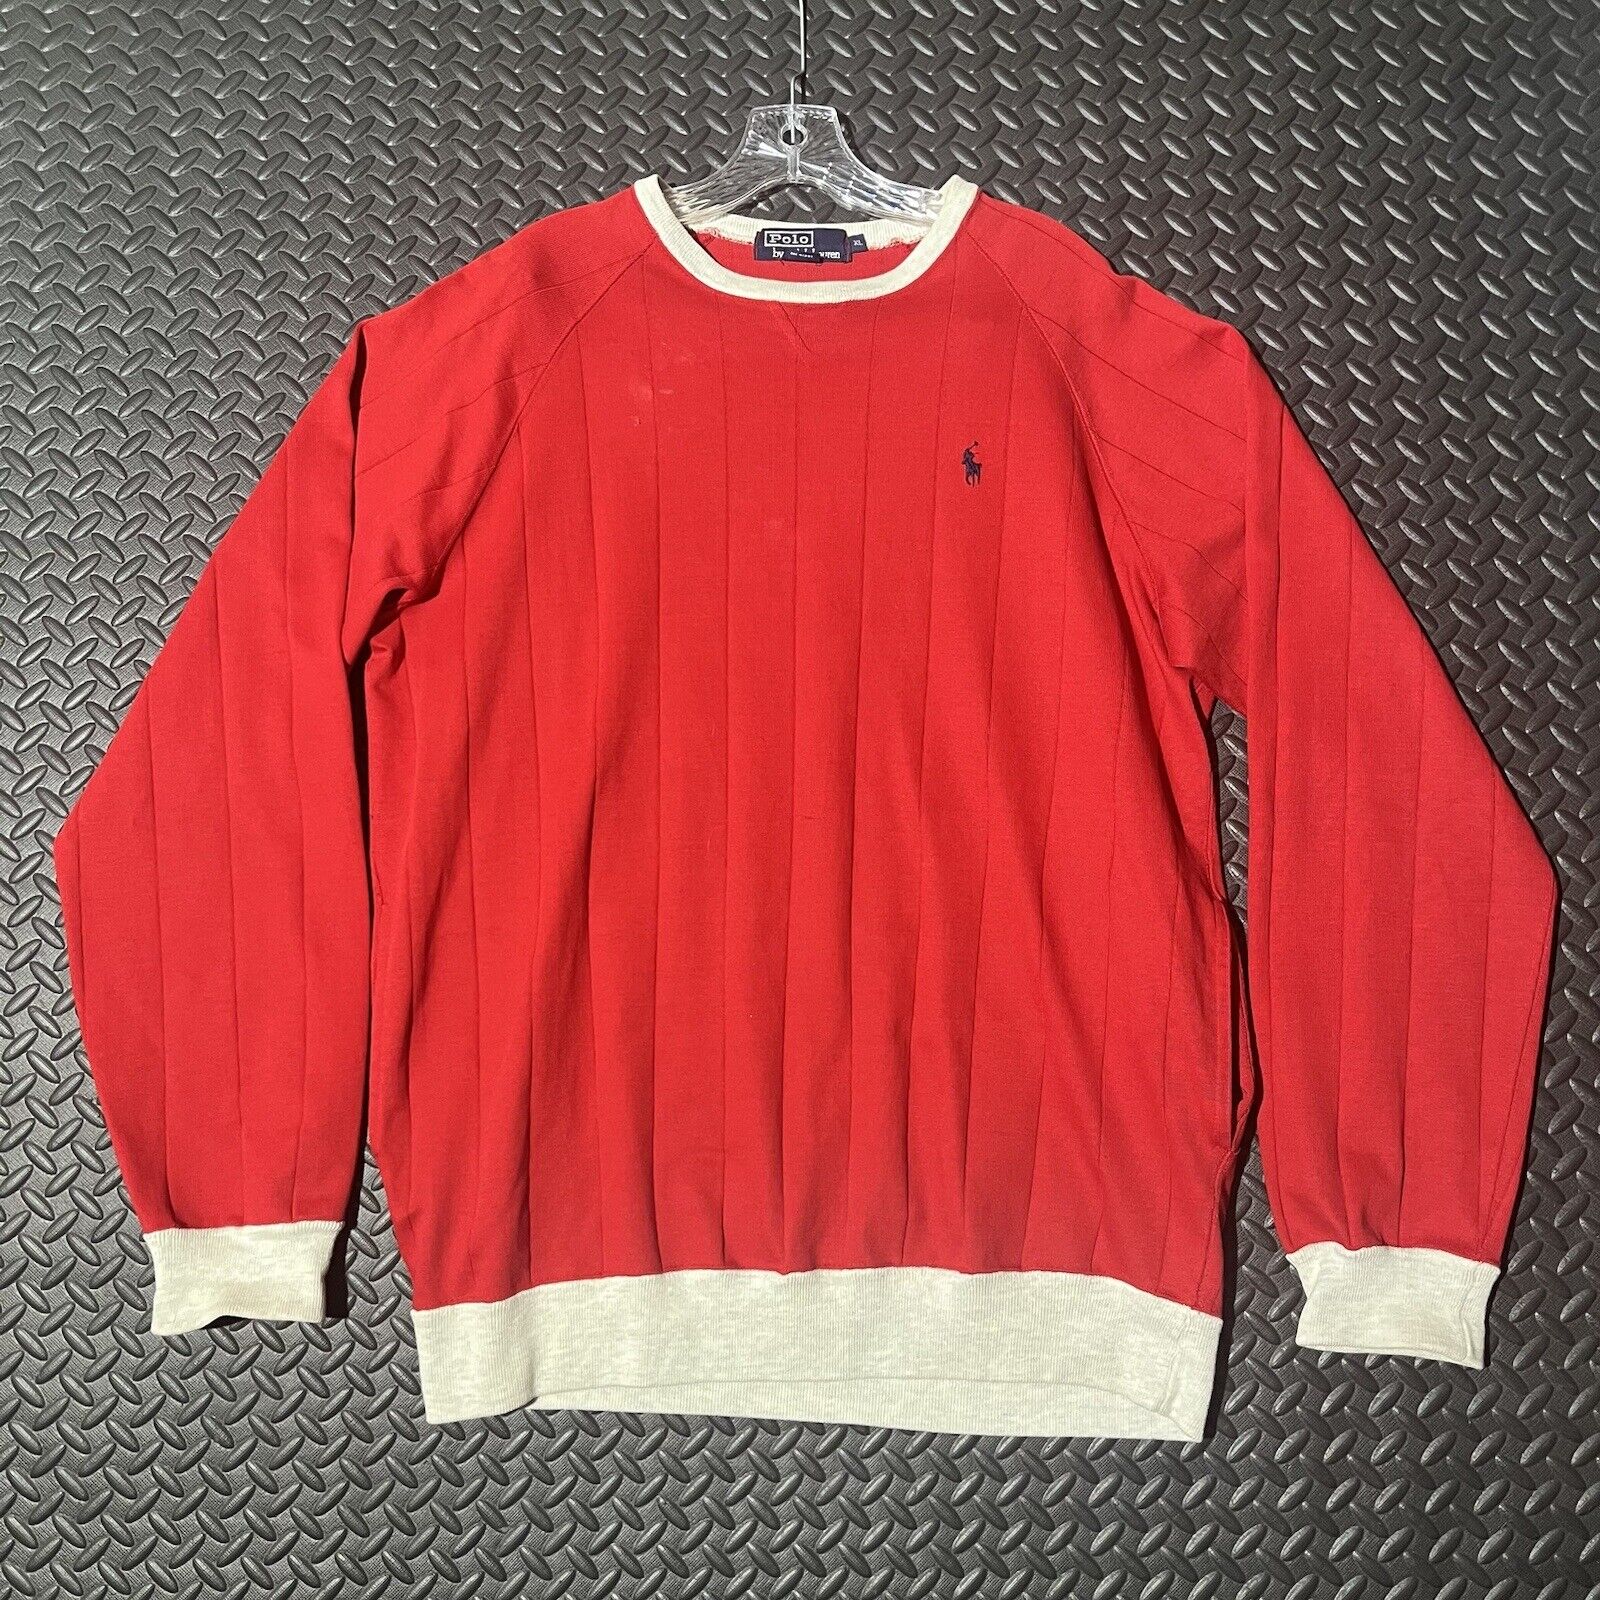 Vintage Polo Ralph Lauren Striped Red Sweatshirt Rare Made in USA Crew Neck Mens